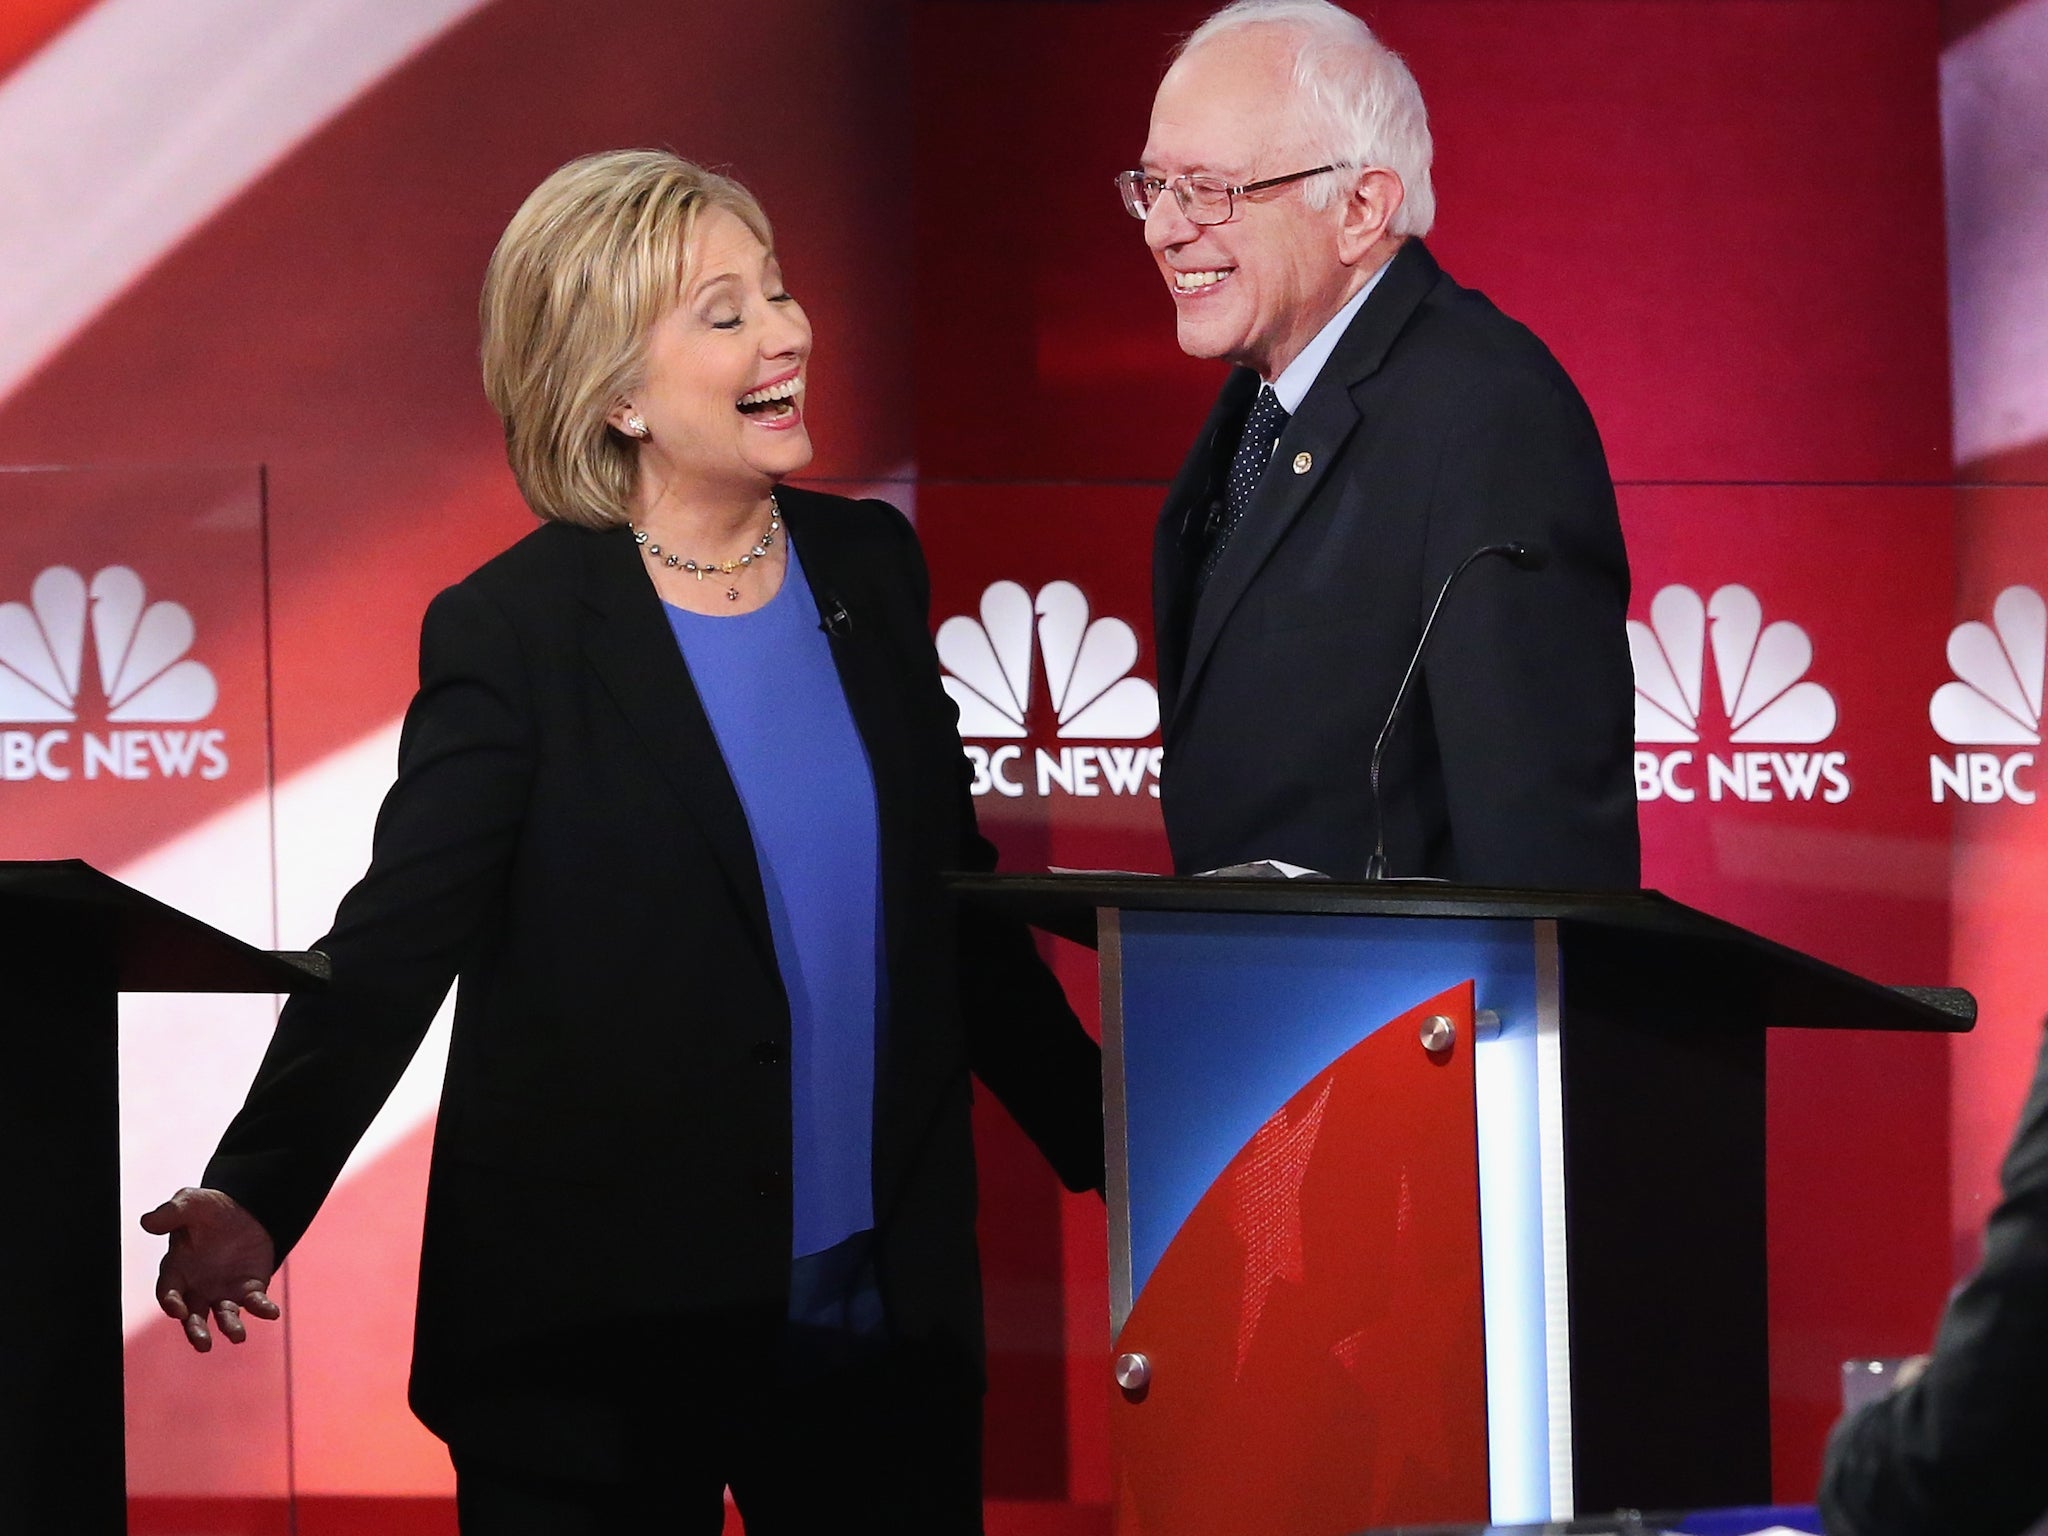 Bernie Sanders has backed Hillary Clinton as the Democratic nominee